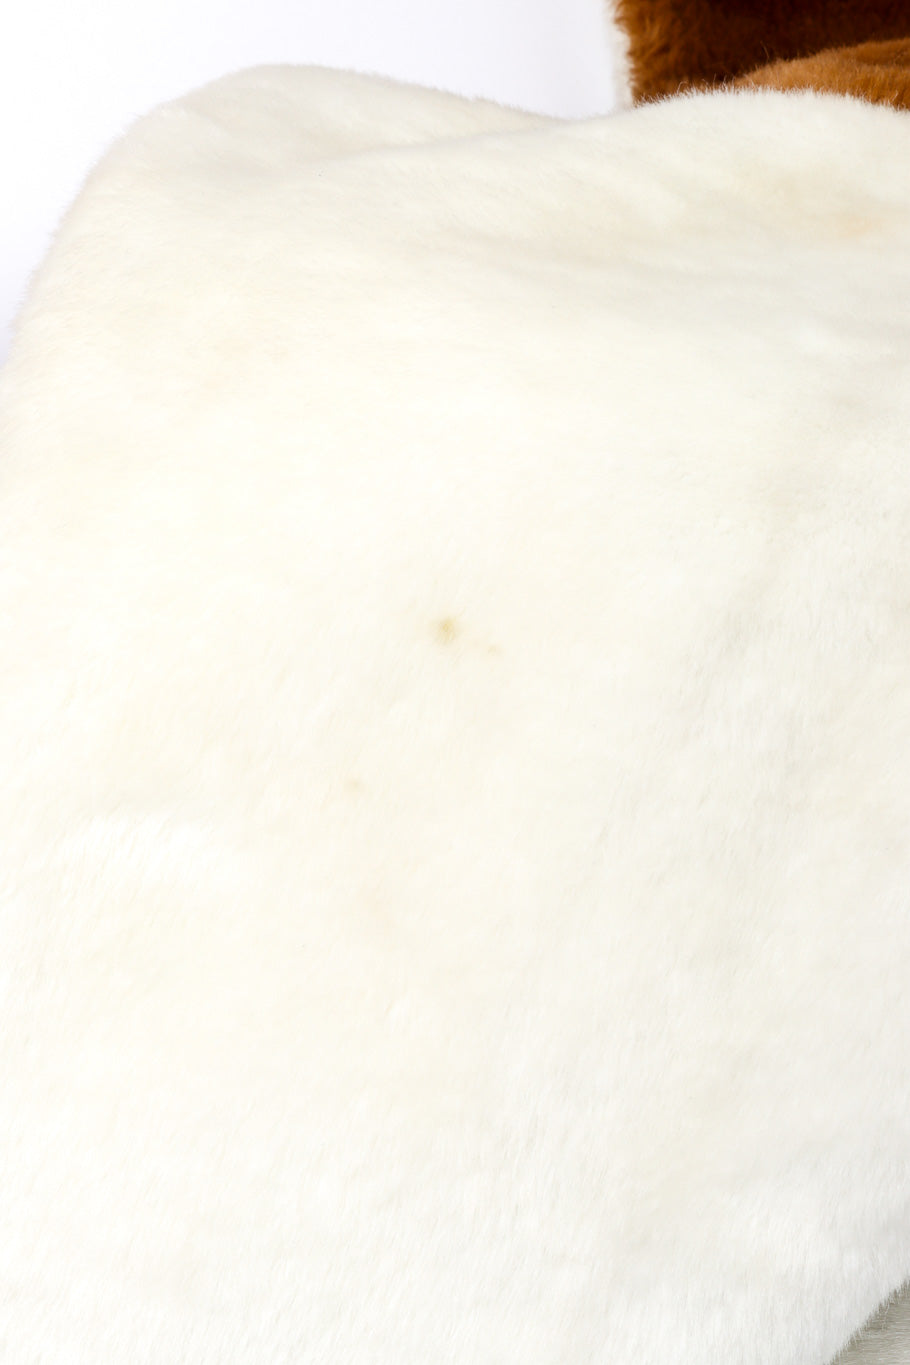 Vintage Jean-Charles de Castelbajac Teddy Bear Coat stain closeup @recessla